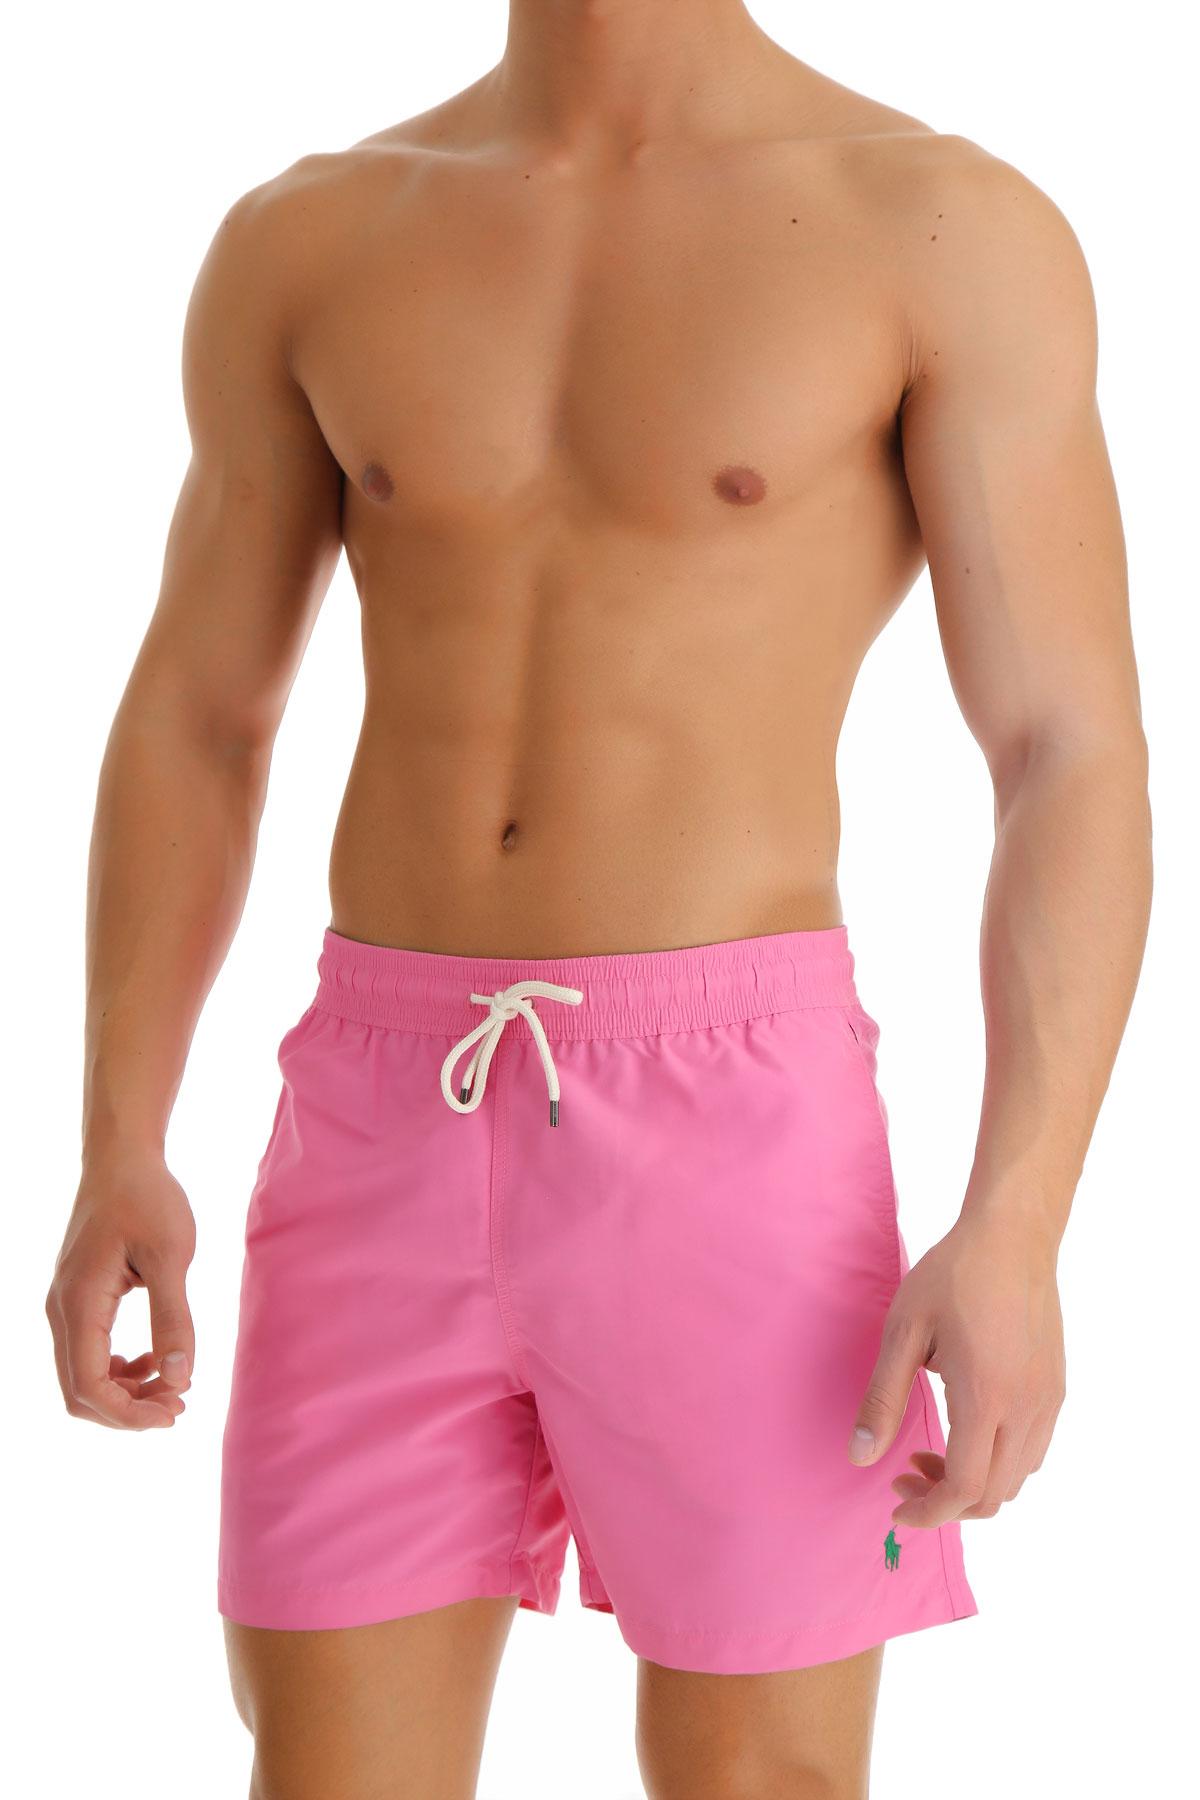 Lyst - Ralph Lauren Mens Swimwear in Pink for Men